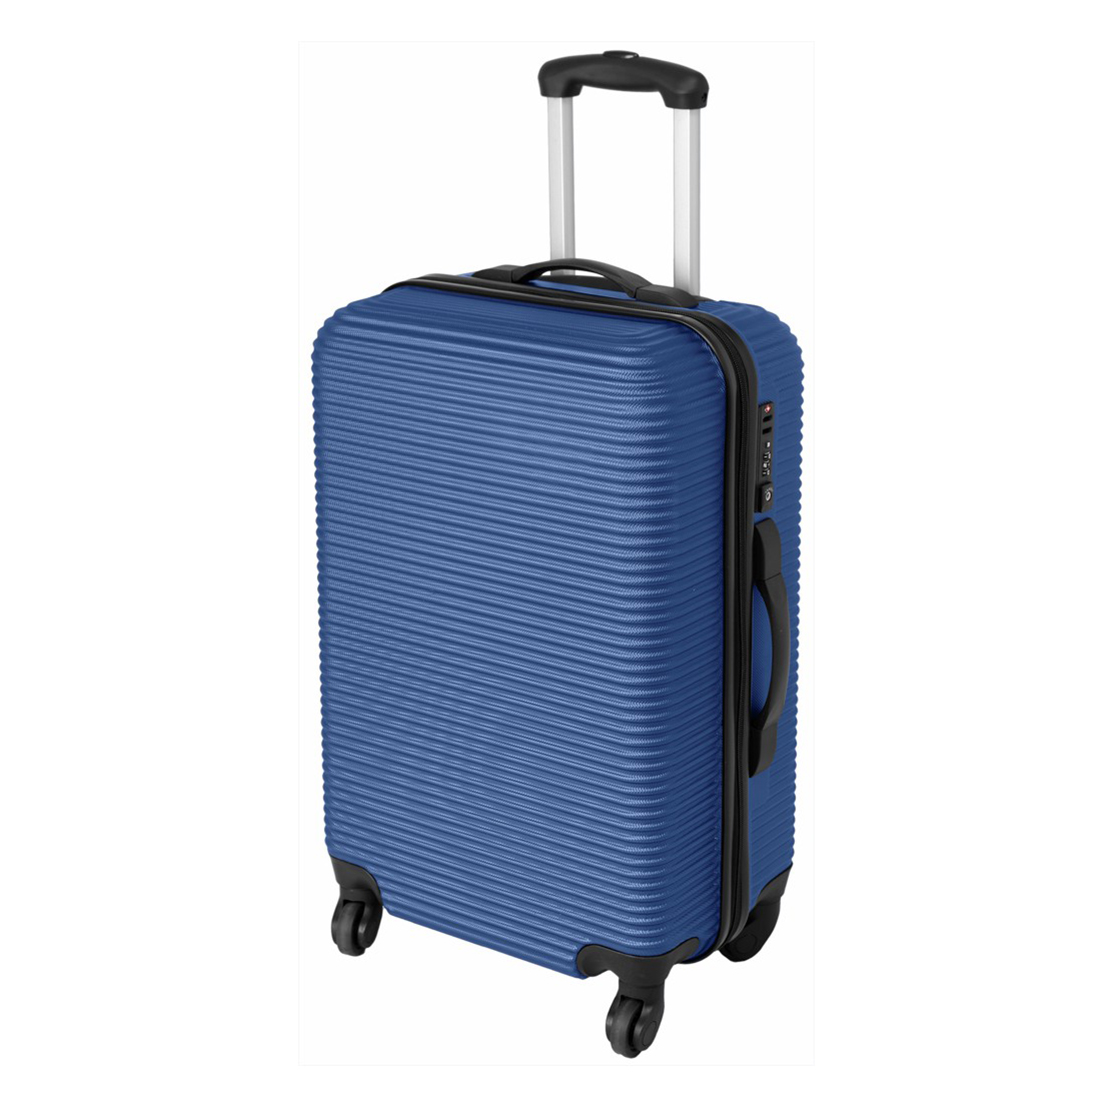 Комплект чемоданов Inwin 15083, синий